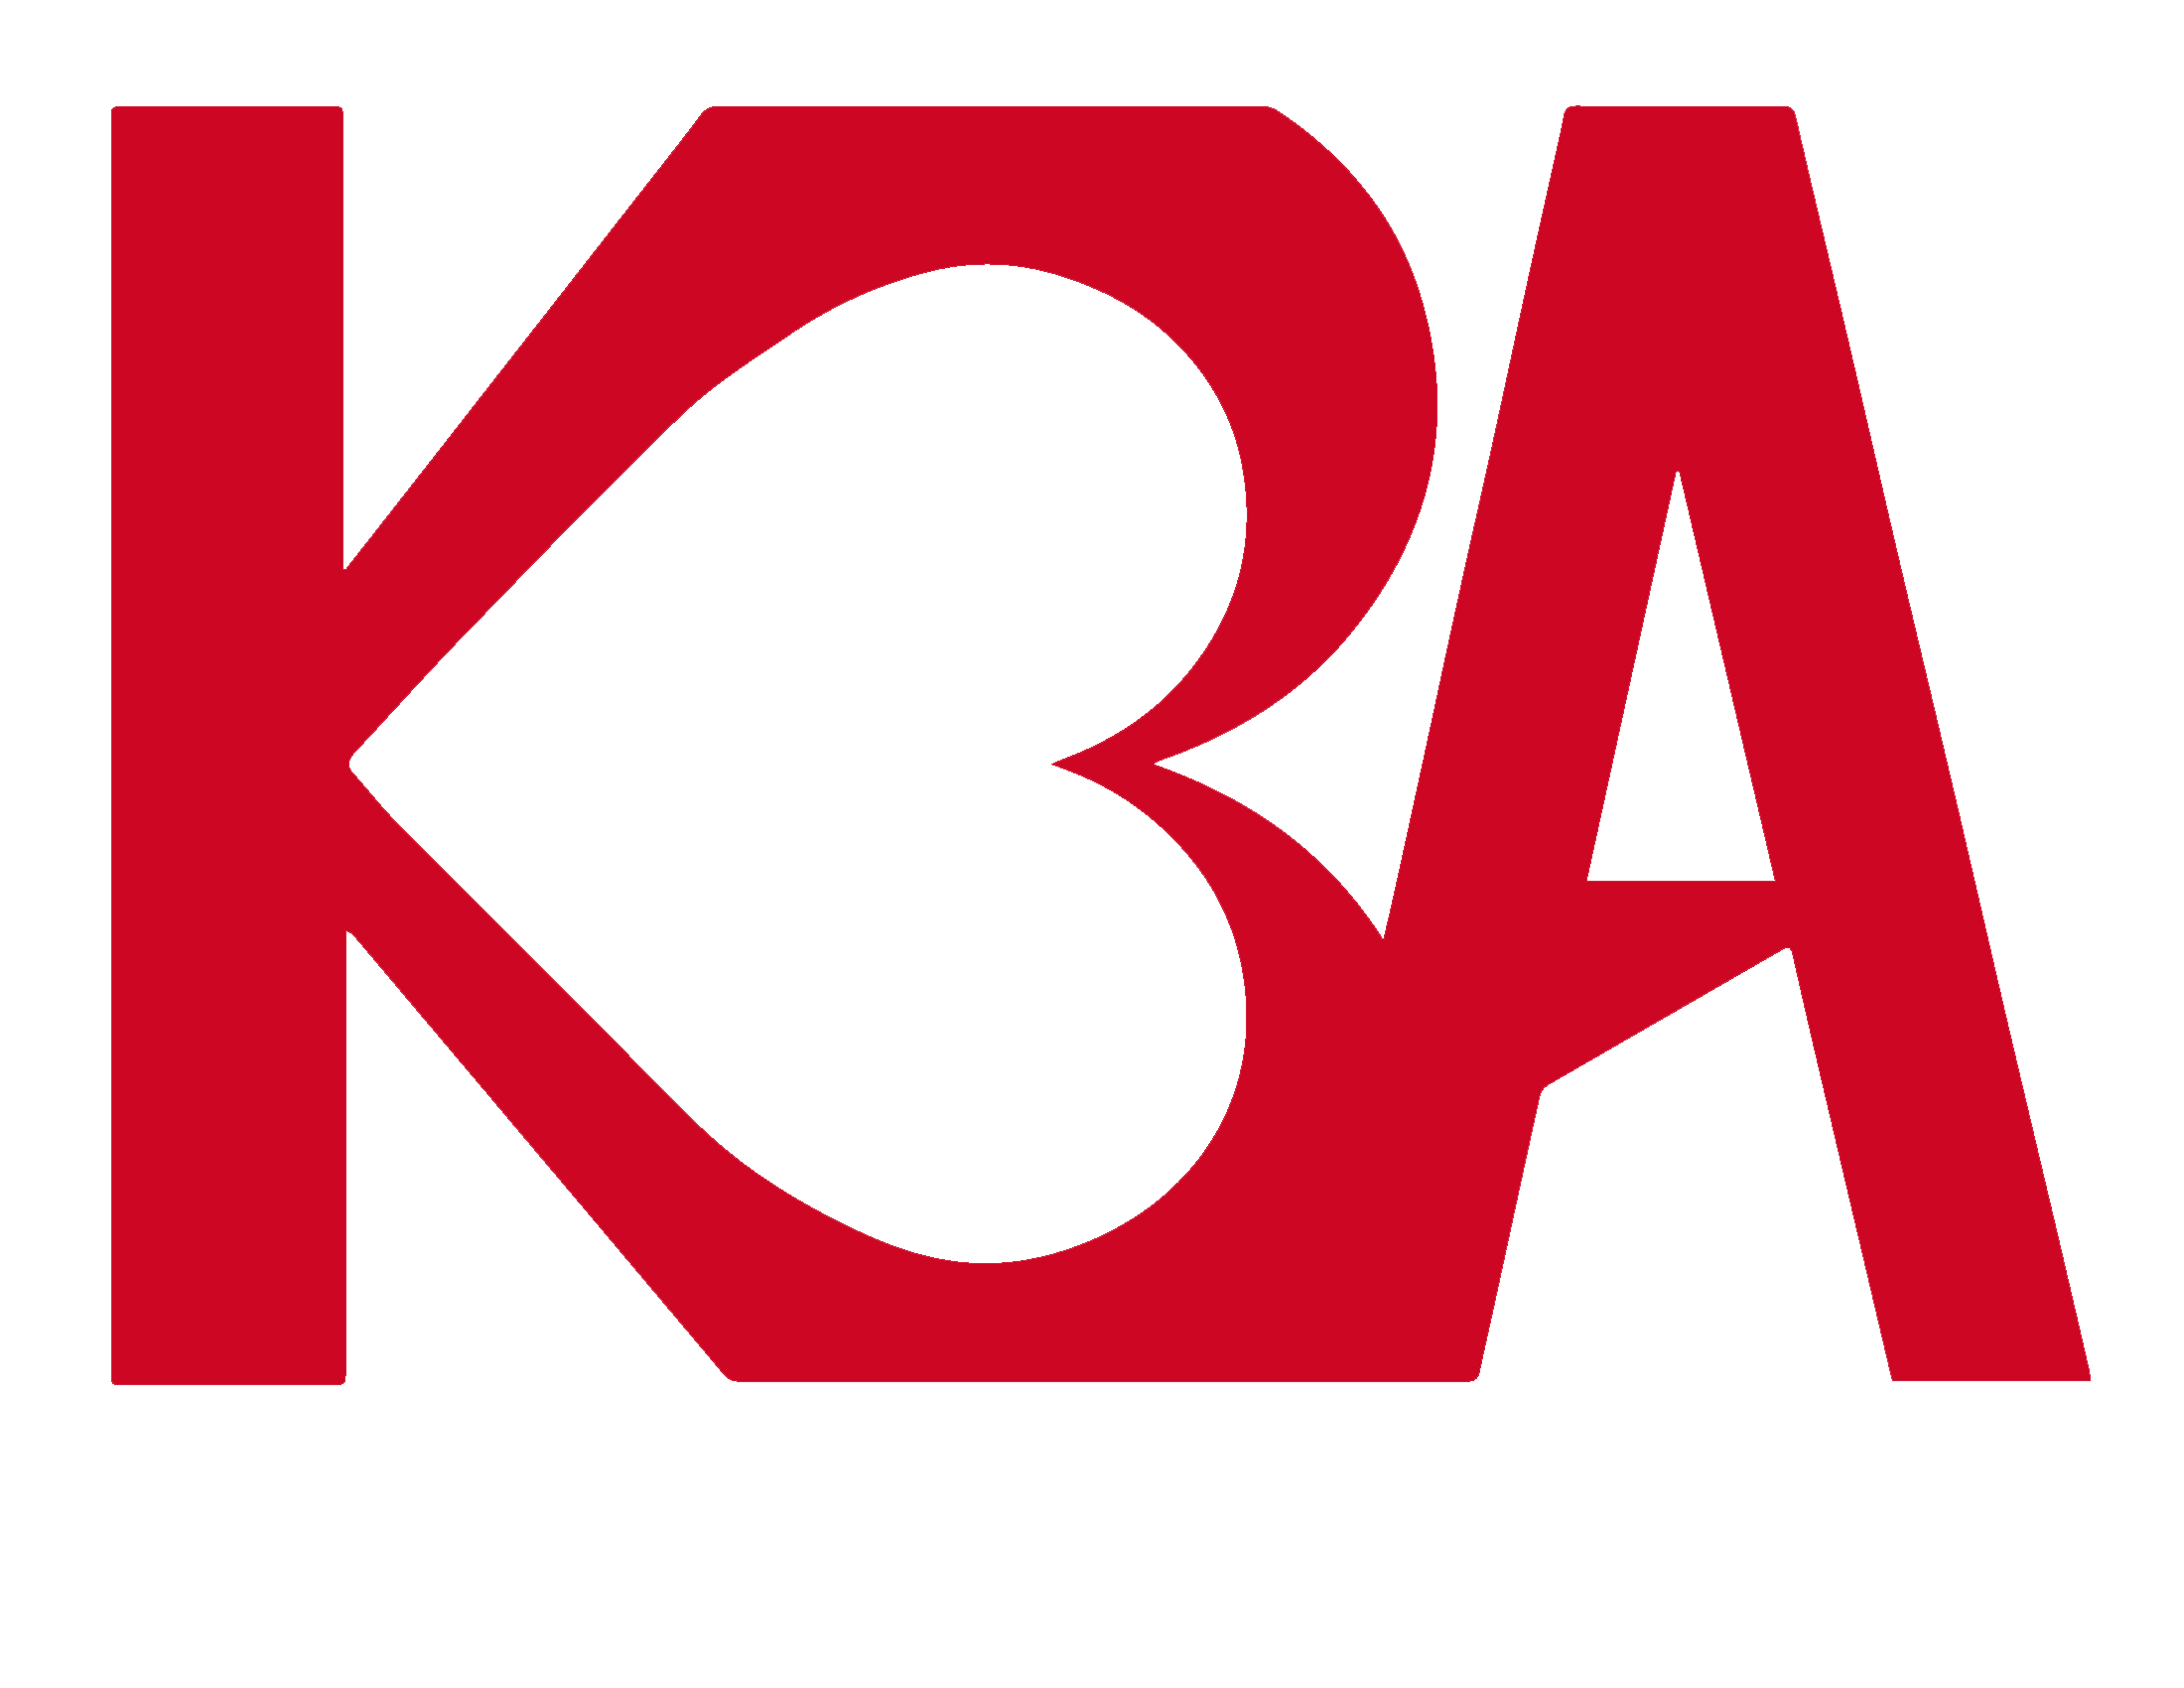 The Katy Business Association